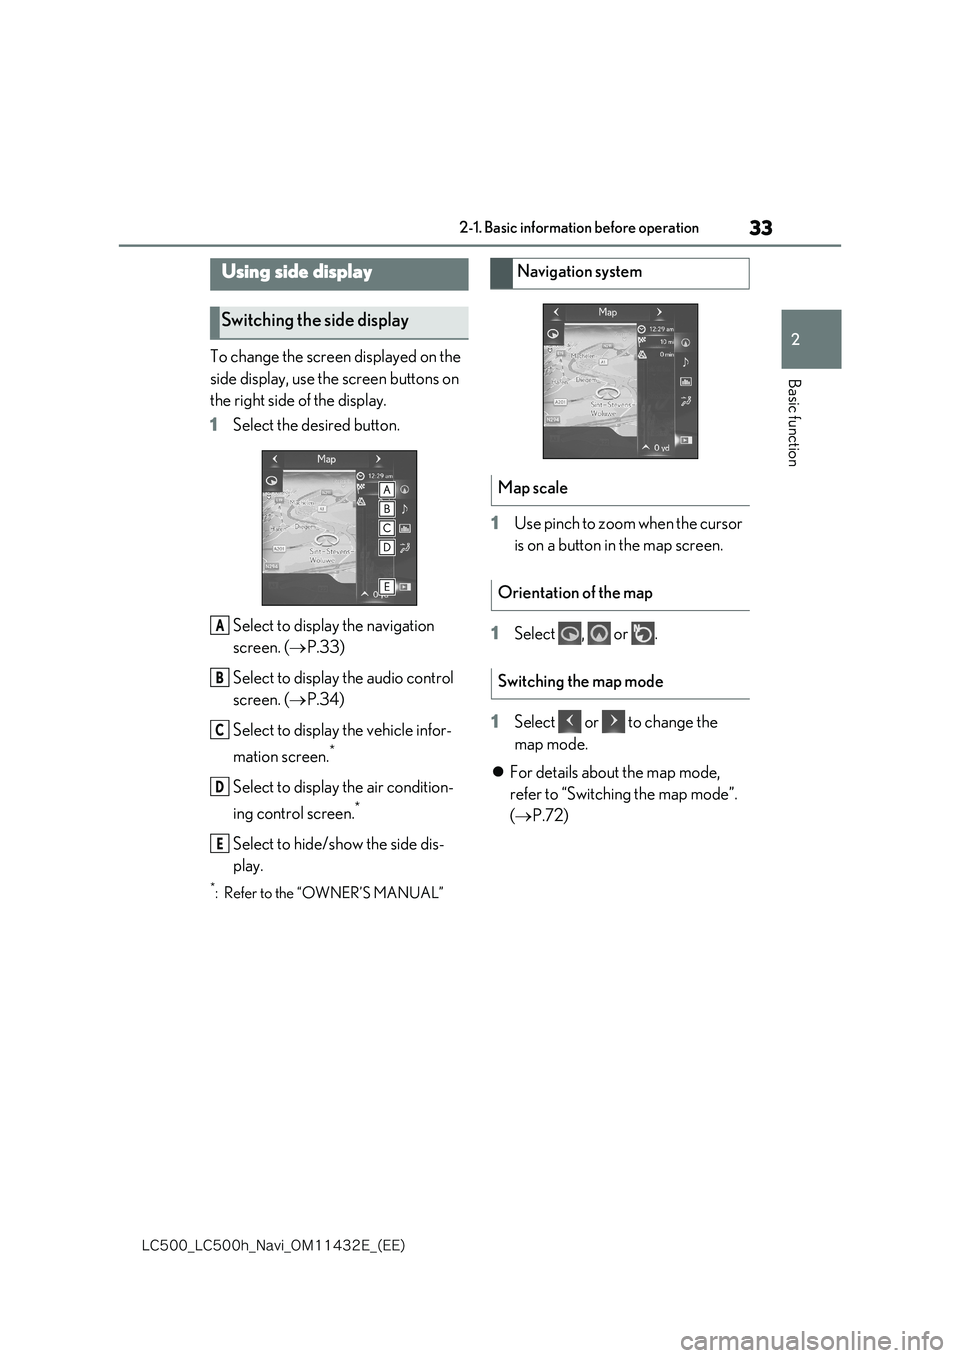 lexus LC500 2018  Navigation Manual 33
2
�-�$����@�-�$����I�@�/�B�W�J�@�0�.������&�@�	�&�&�

2-1. Basic information before operation
Basic function
To change the screen displayed on the  
side display, use the screen buttons 